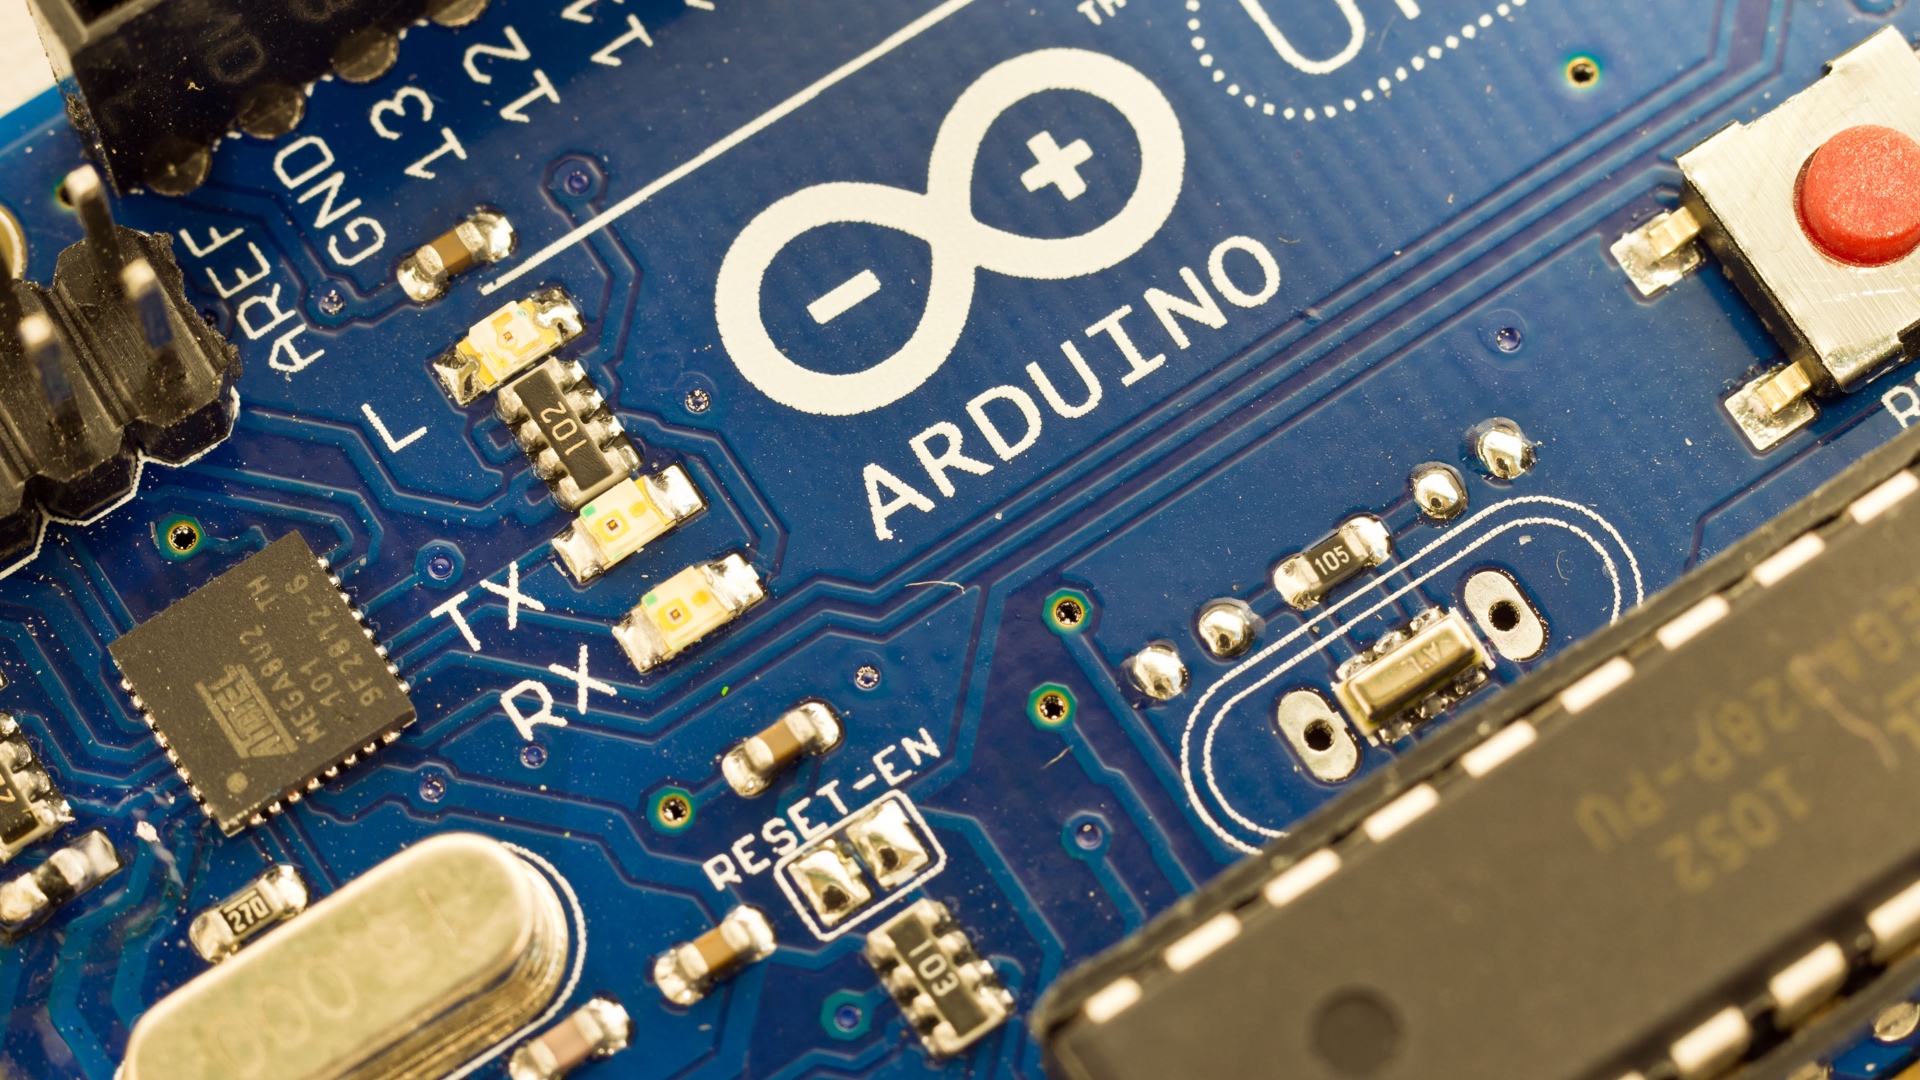 The basics of electronics with Arduino.